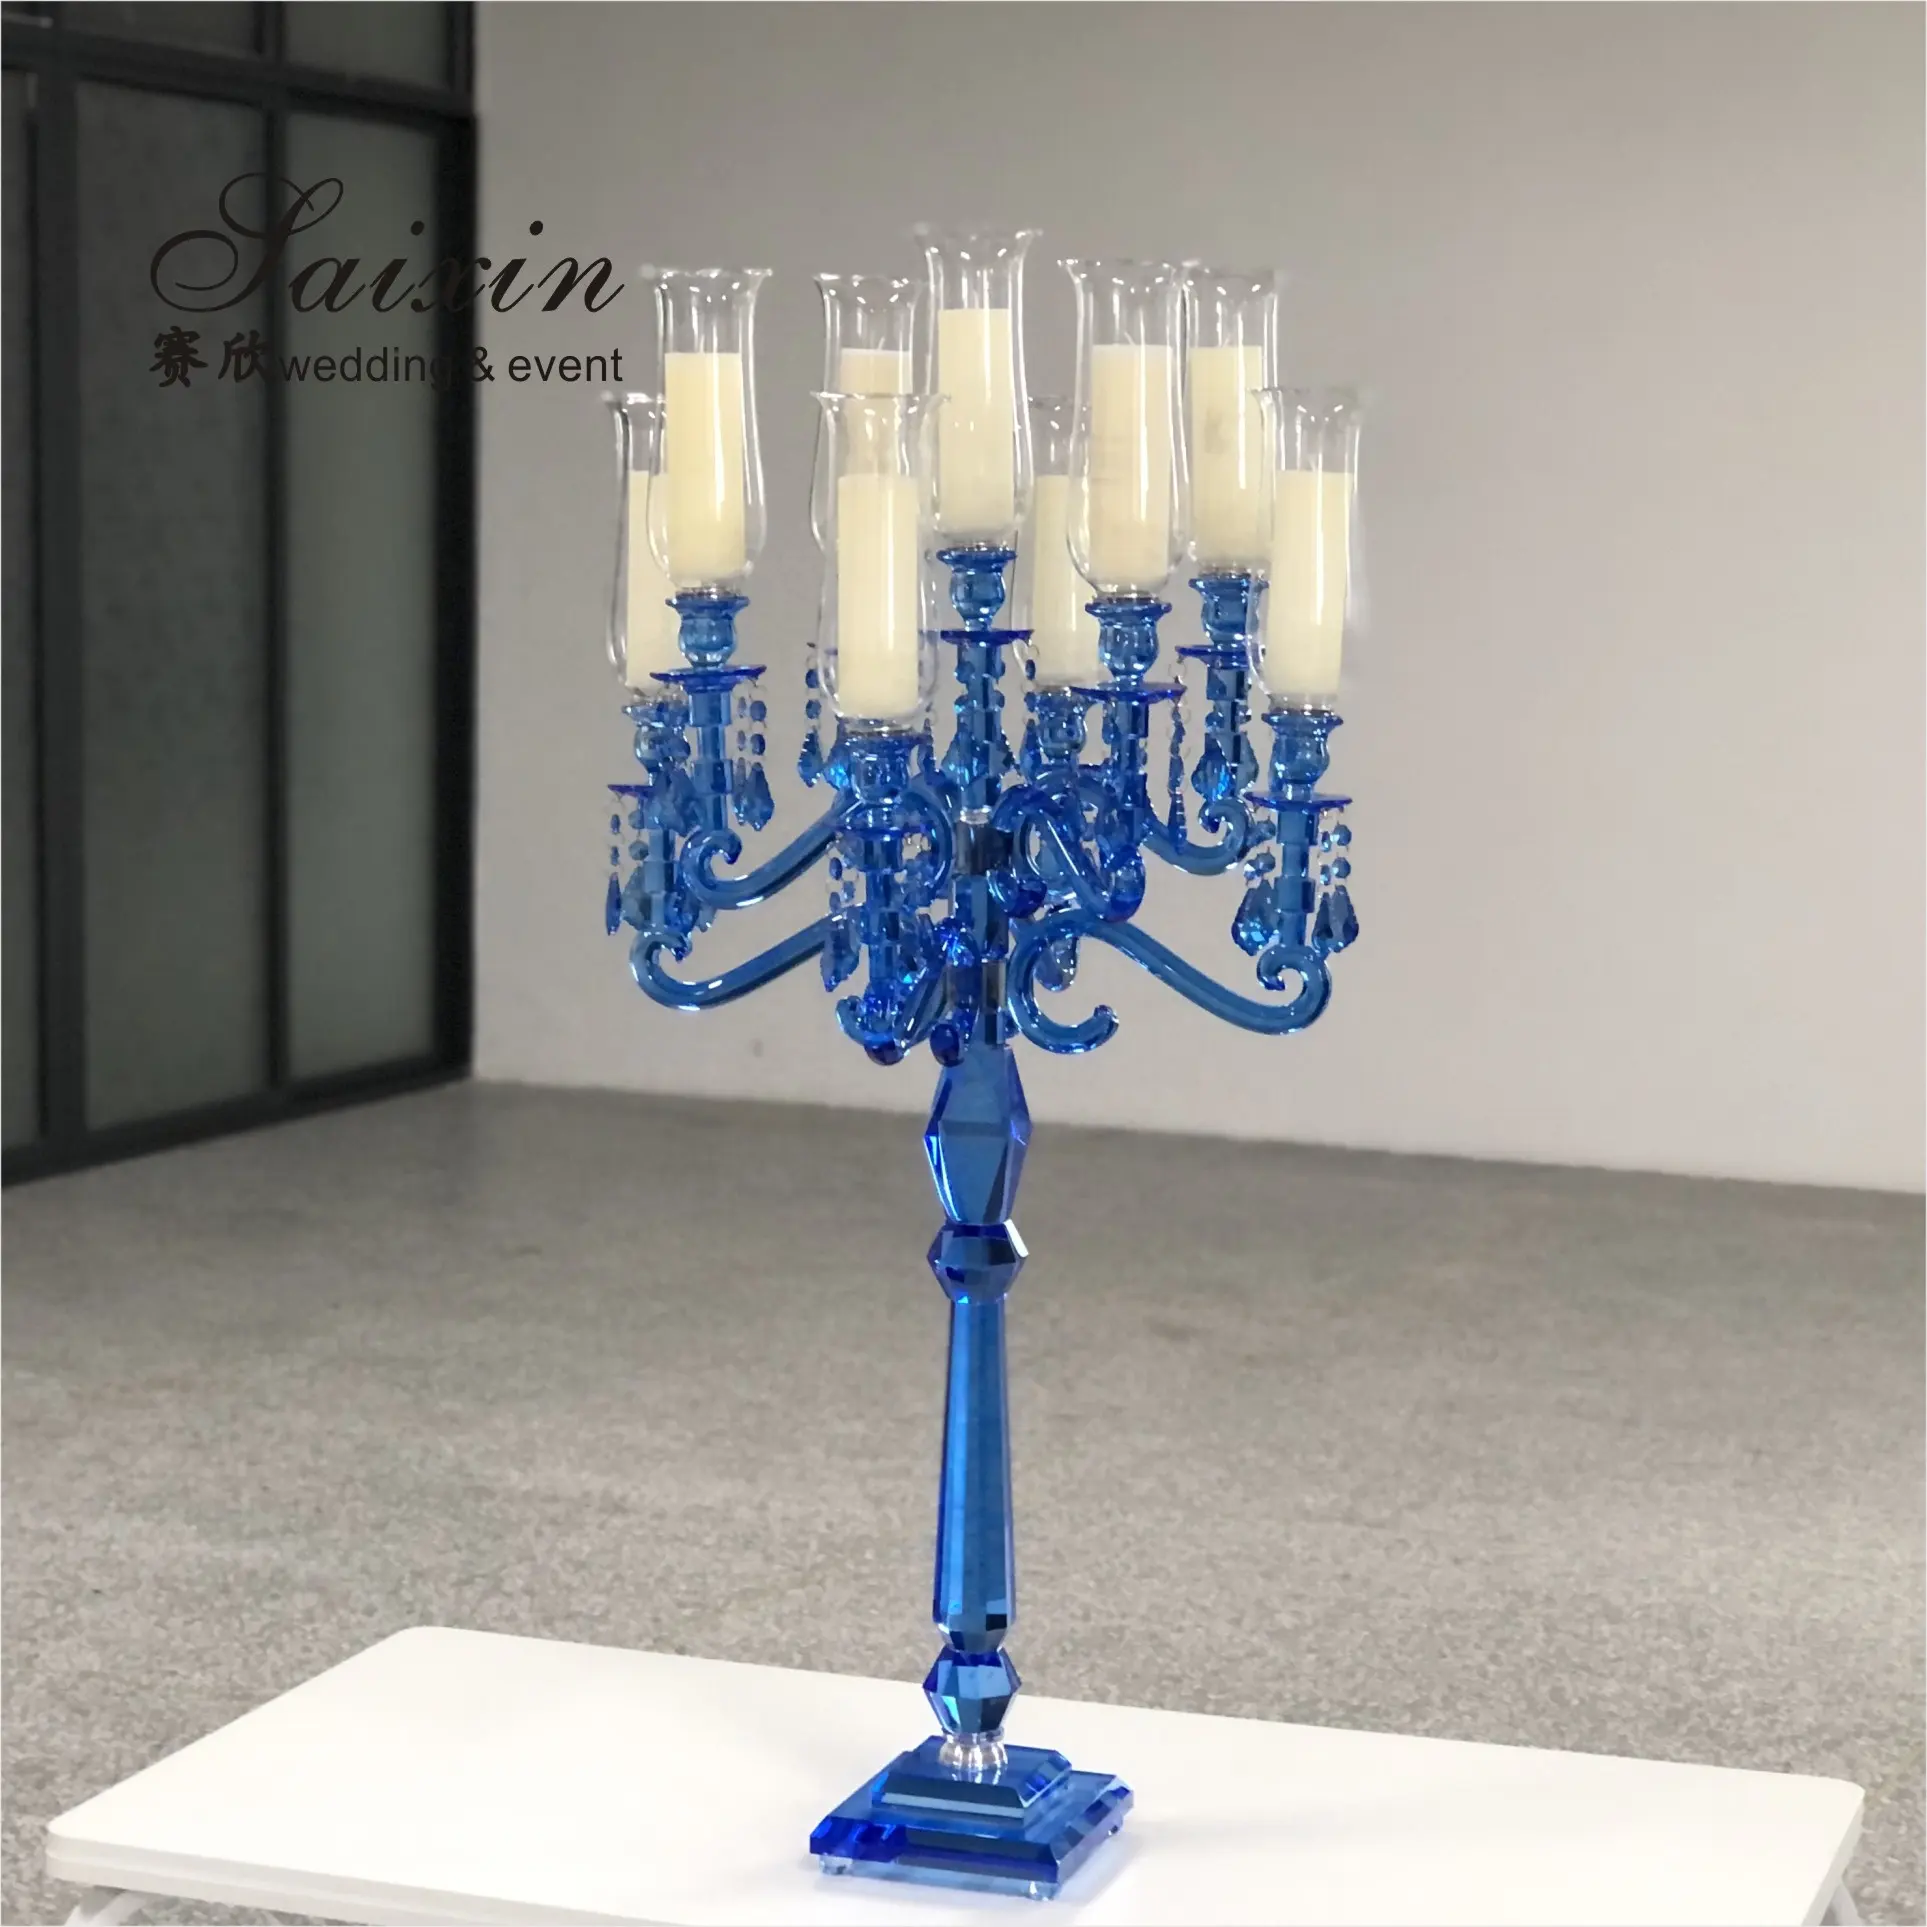 Nuevo diseño de candelabros de cristal azul, 9 brazos, Decoración de mesa de boda, candelabro de boda de cristal alto, pieza central